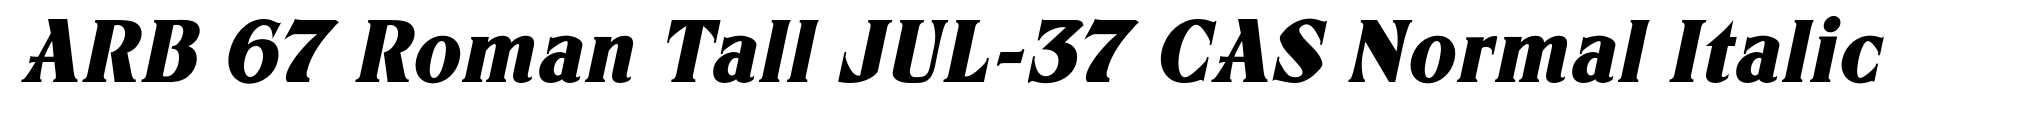 ARB 67 Roman Tall JUL-37 CAS Normal Italic image